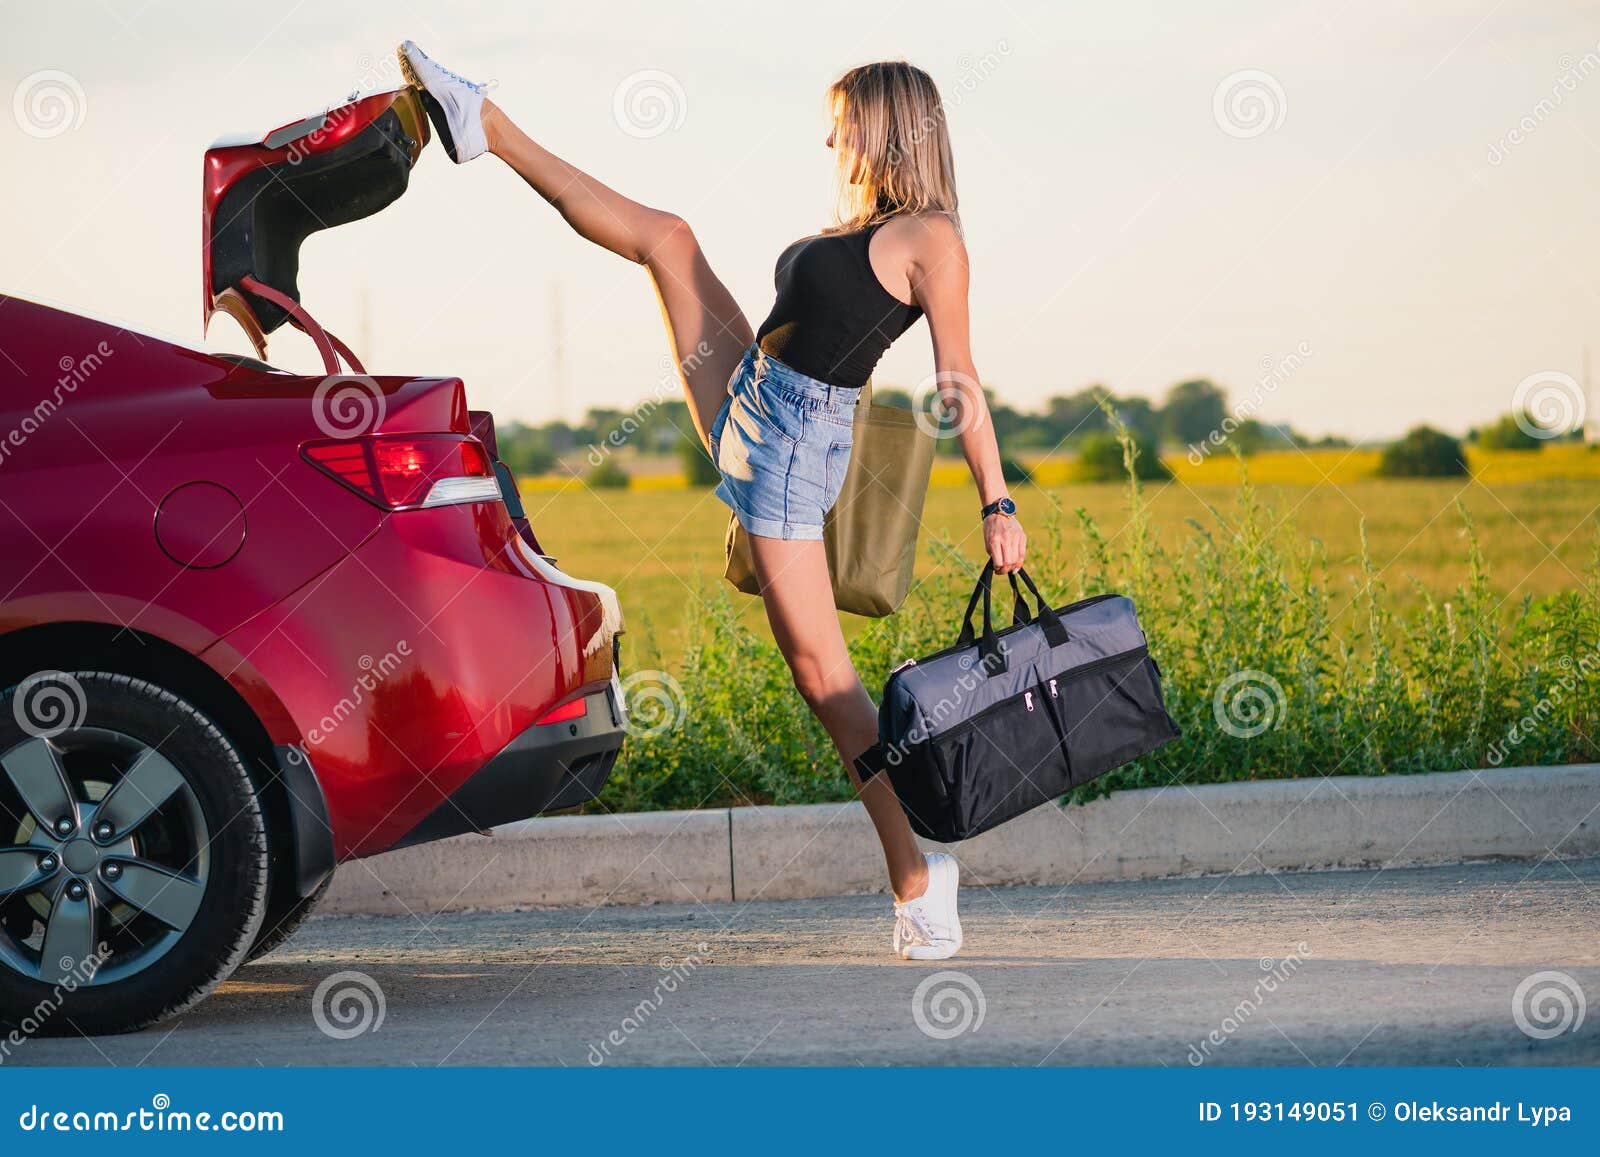 Sexy girl pushing car